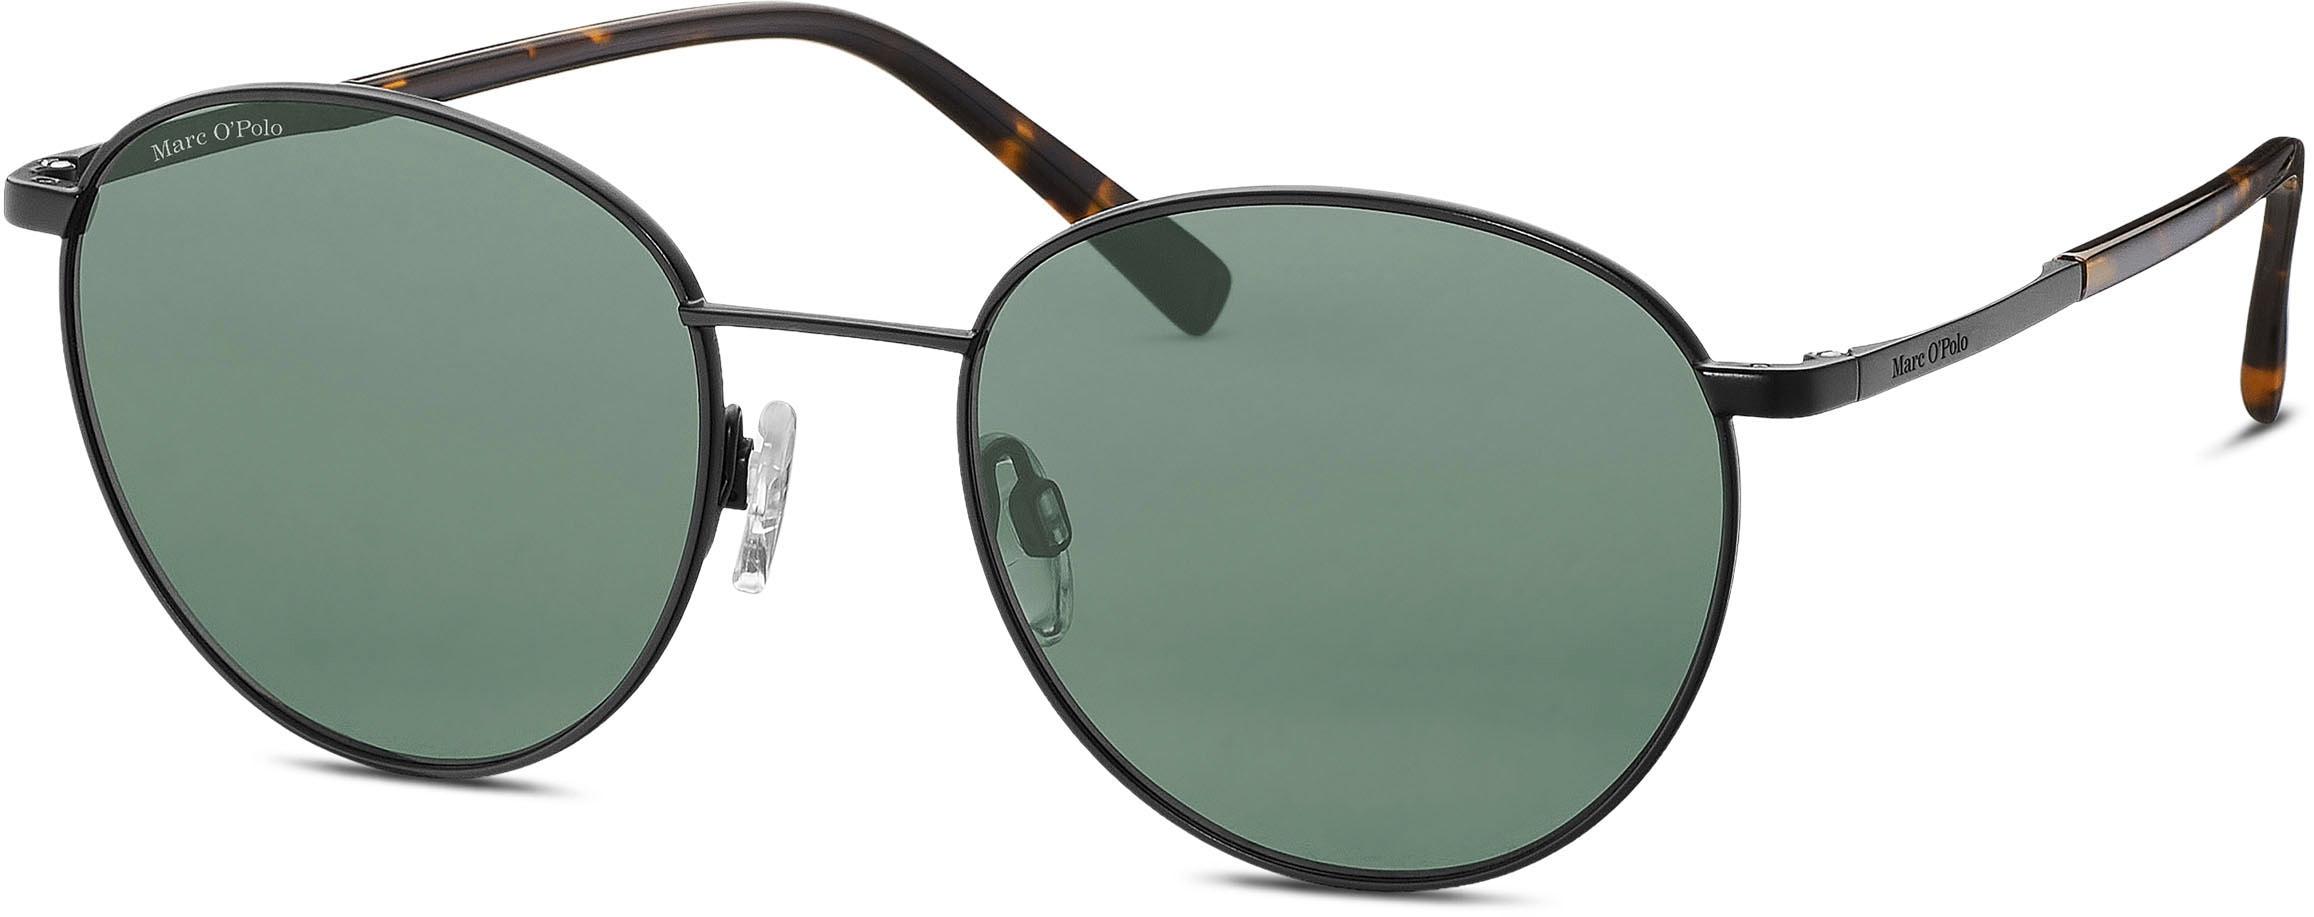 Sonnenbrille »Modell 505112«, Panto-Form